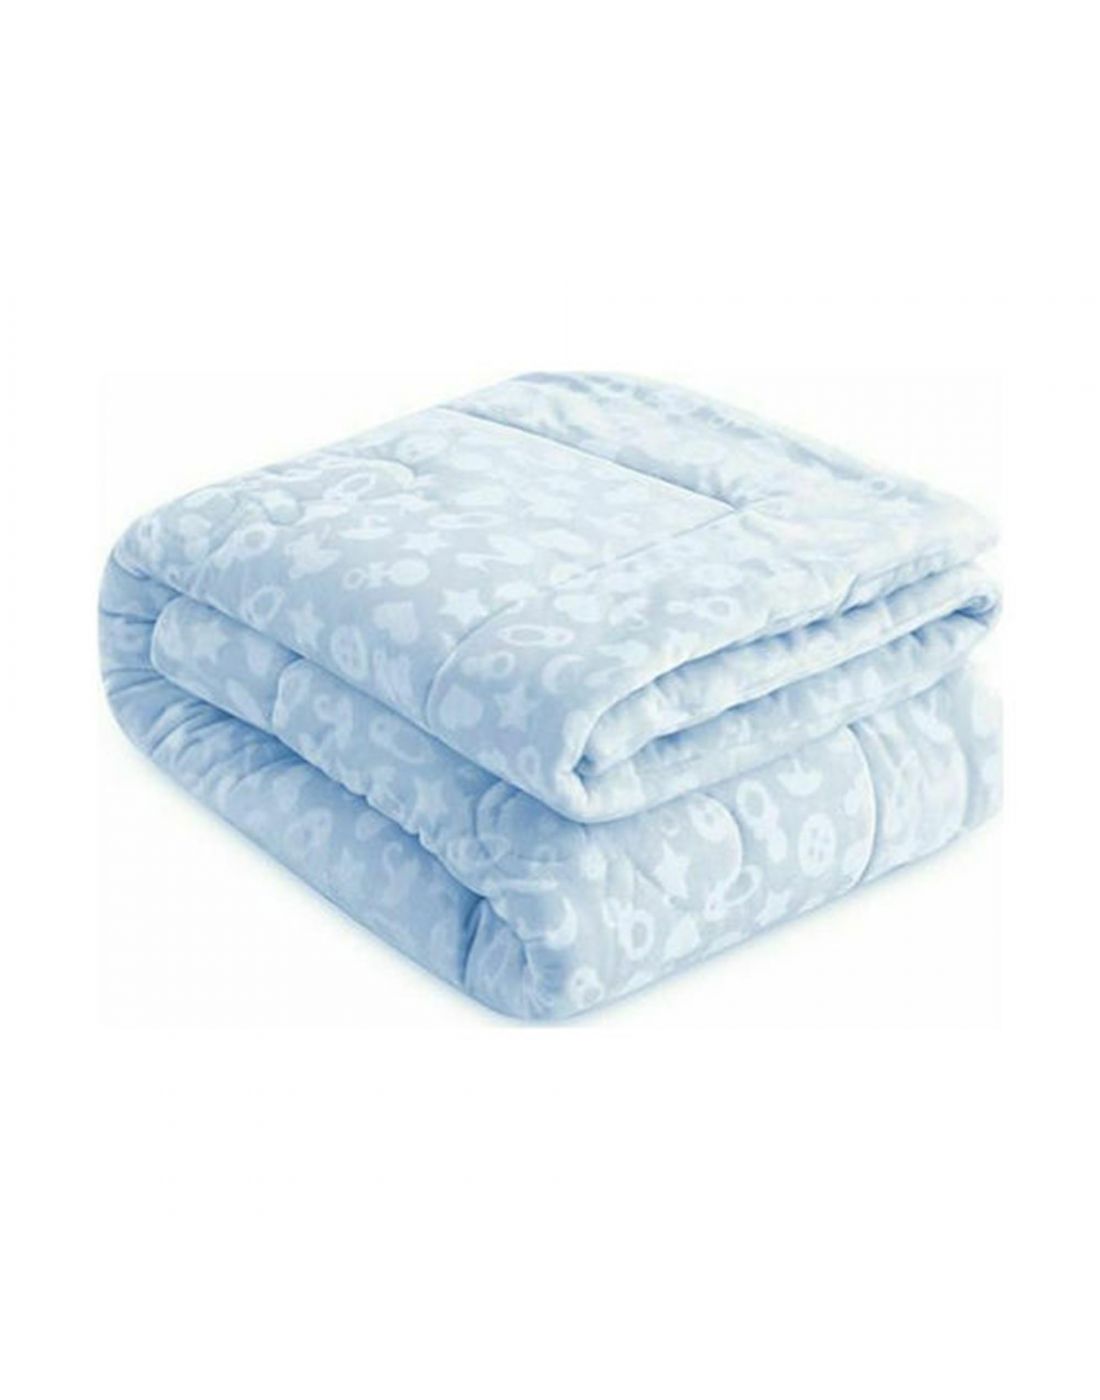 Baby Comforter Duvet-Blanket 110*140